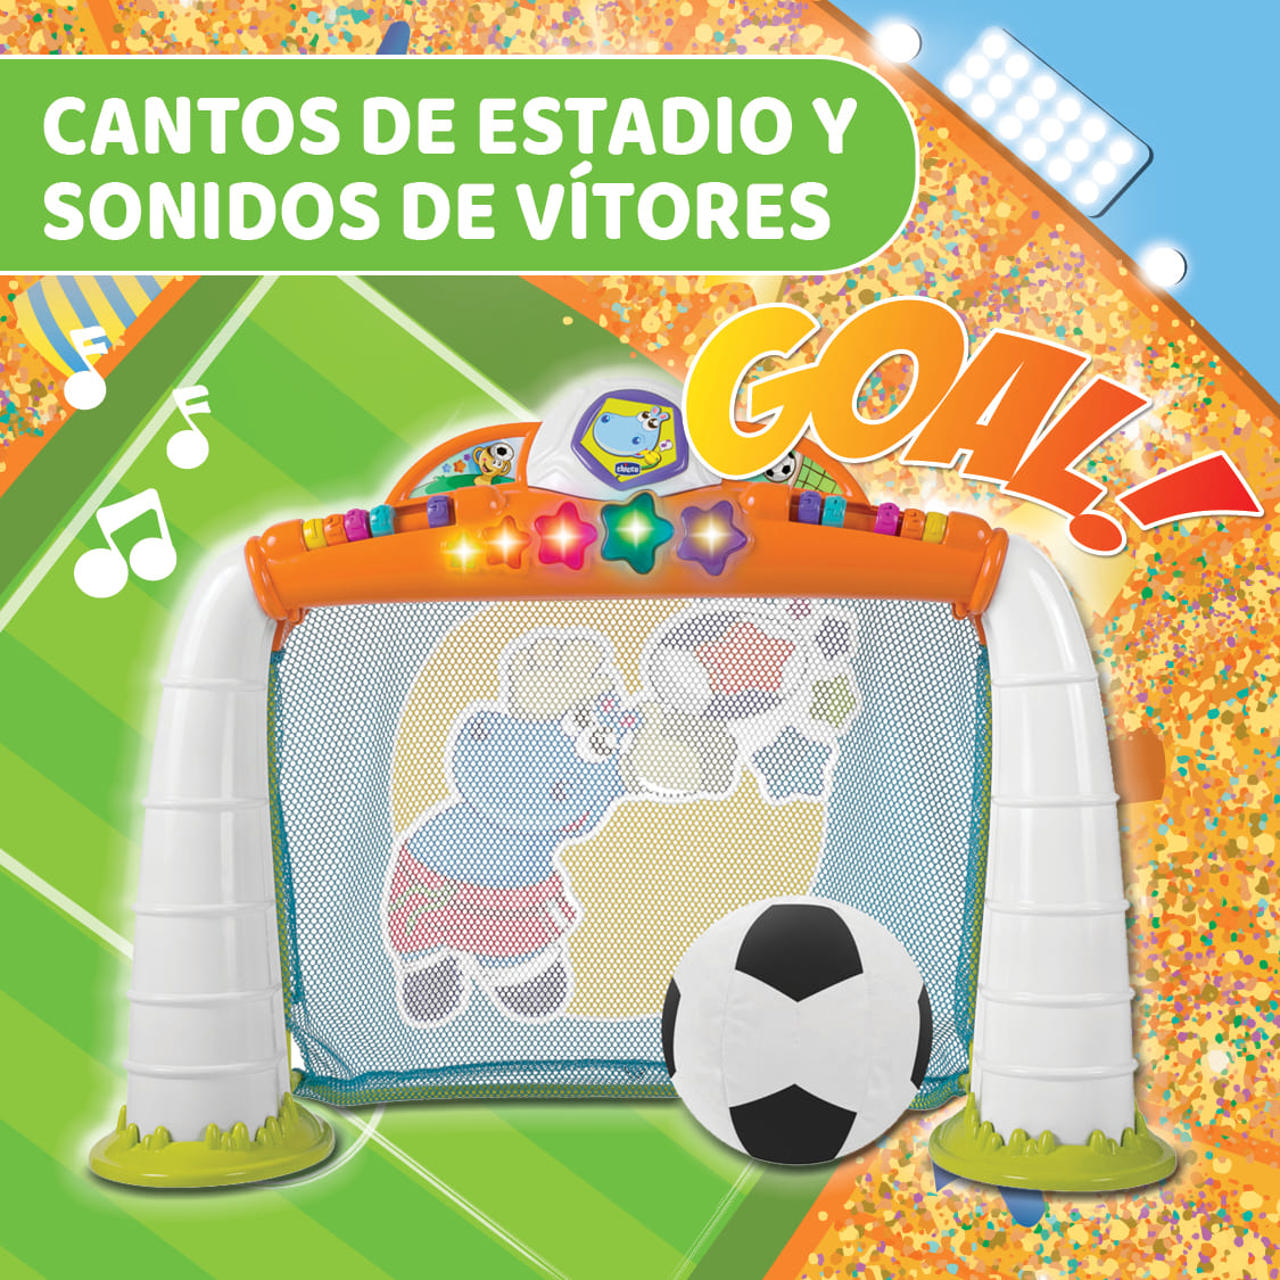 Portería fútbol infantil Chicco Goal League de segunda mano por 20 EUR en  Alhaurín de la Torre en WALLAPOP